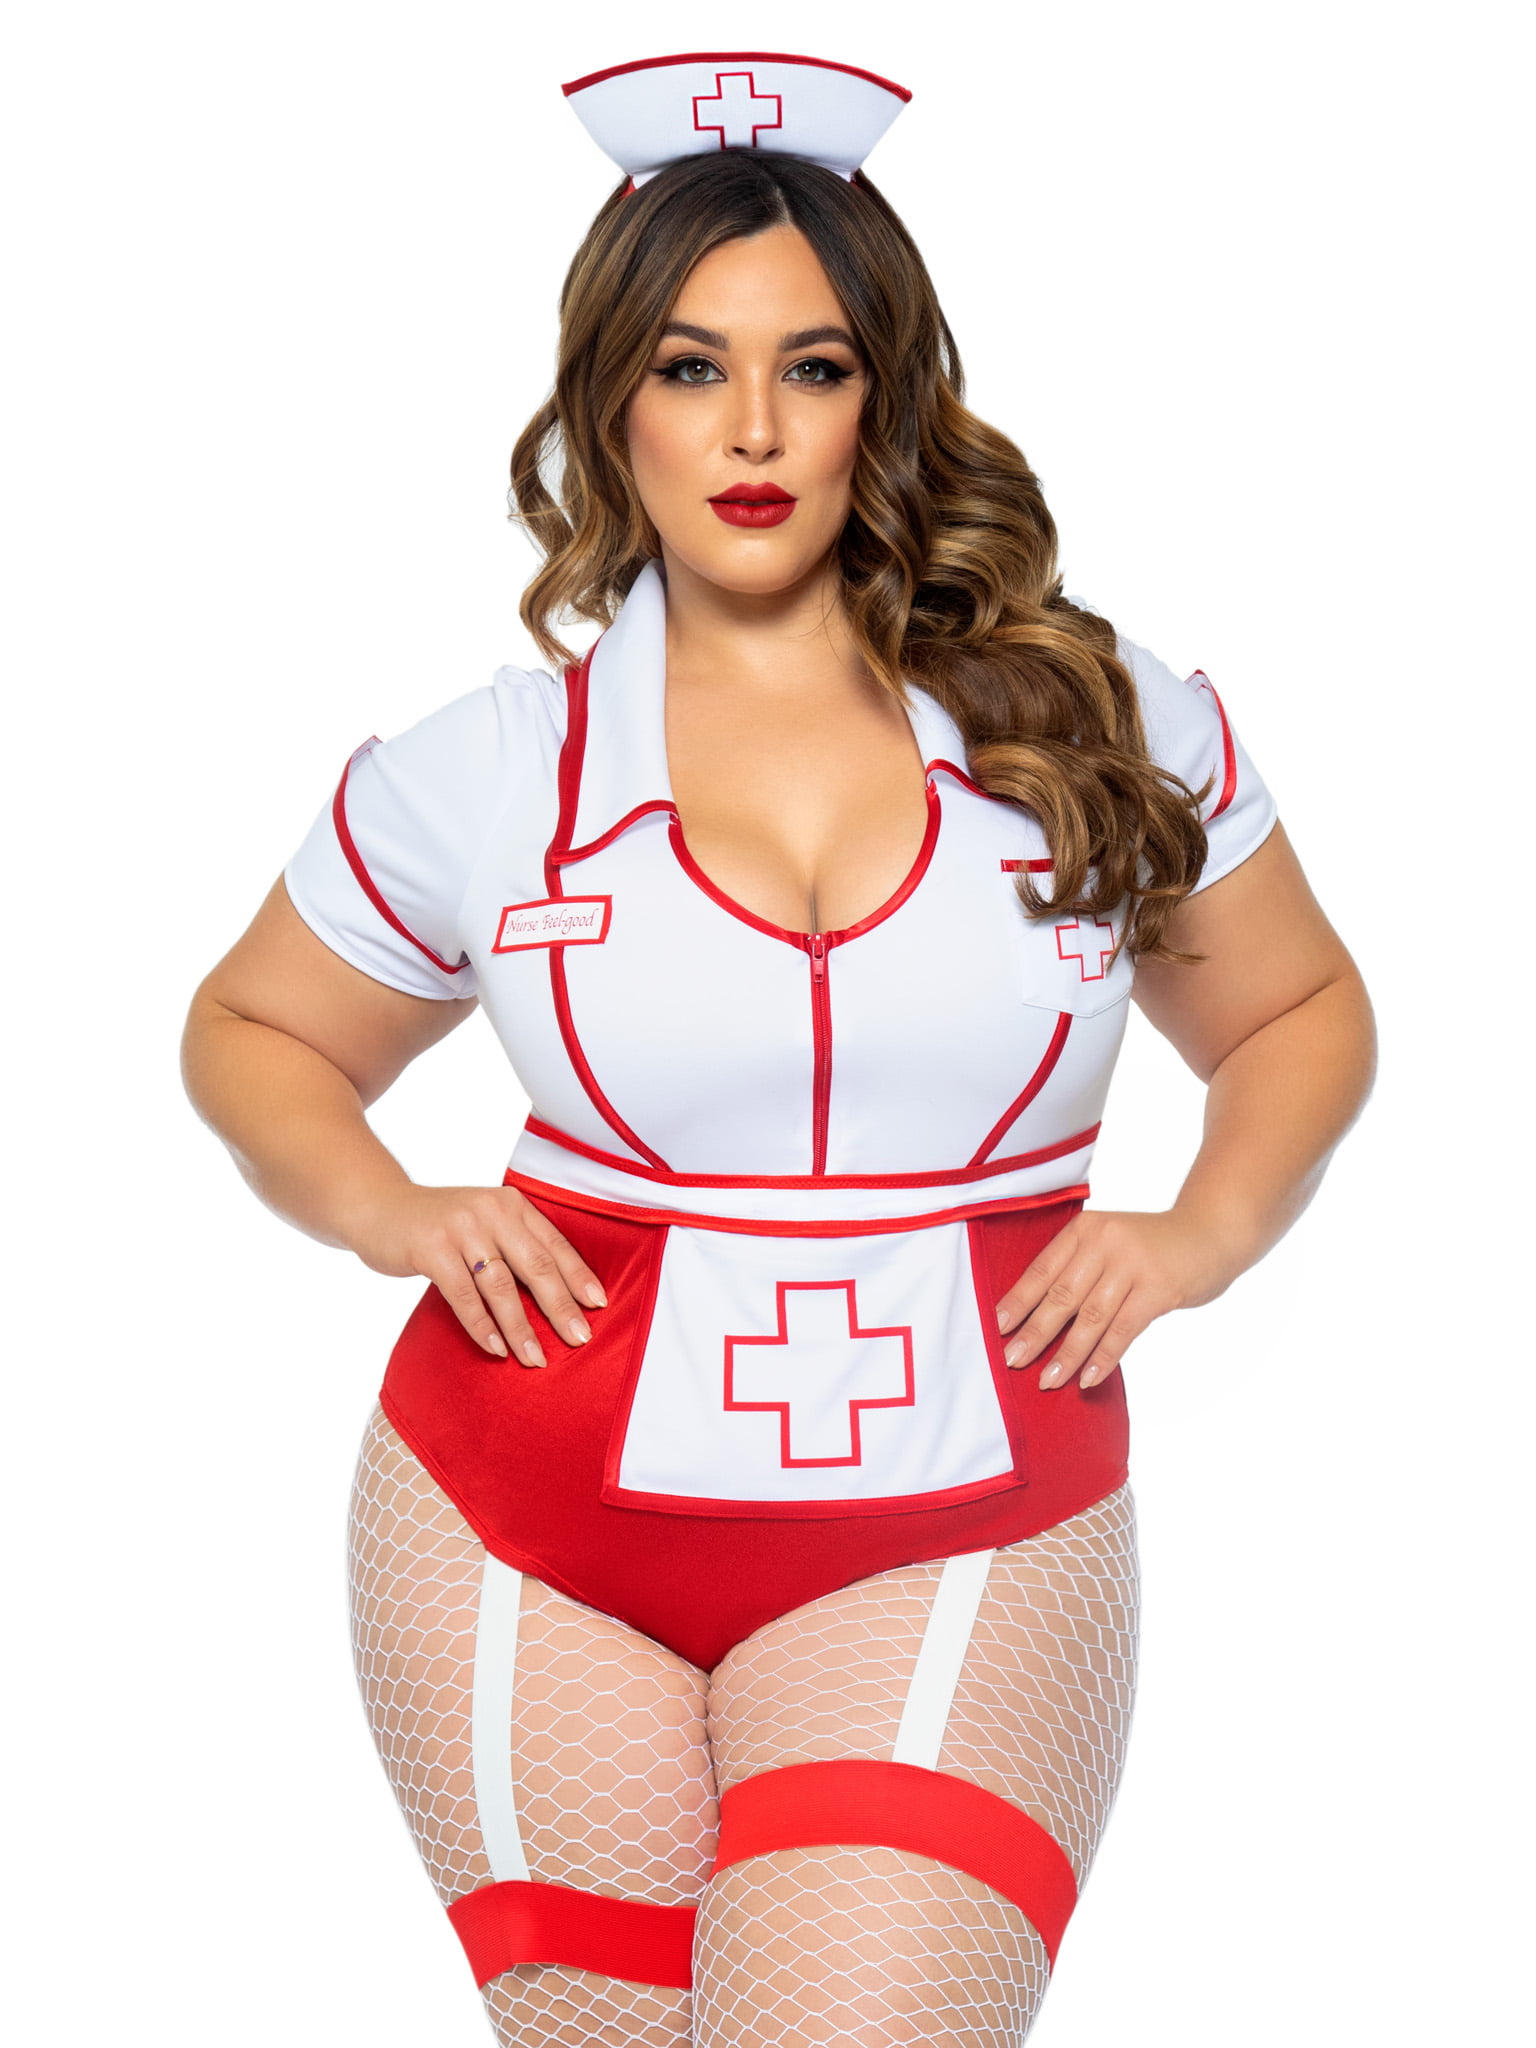 Leg Avenue Women's Plus Size Nurse - Walmart.com